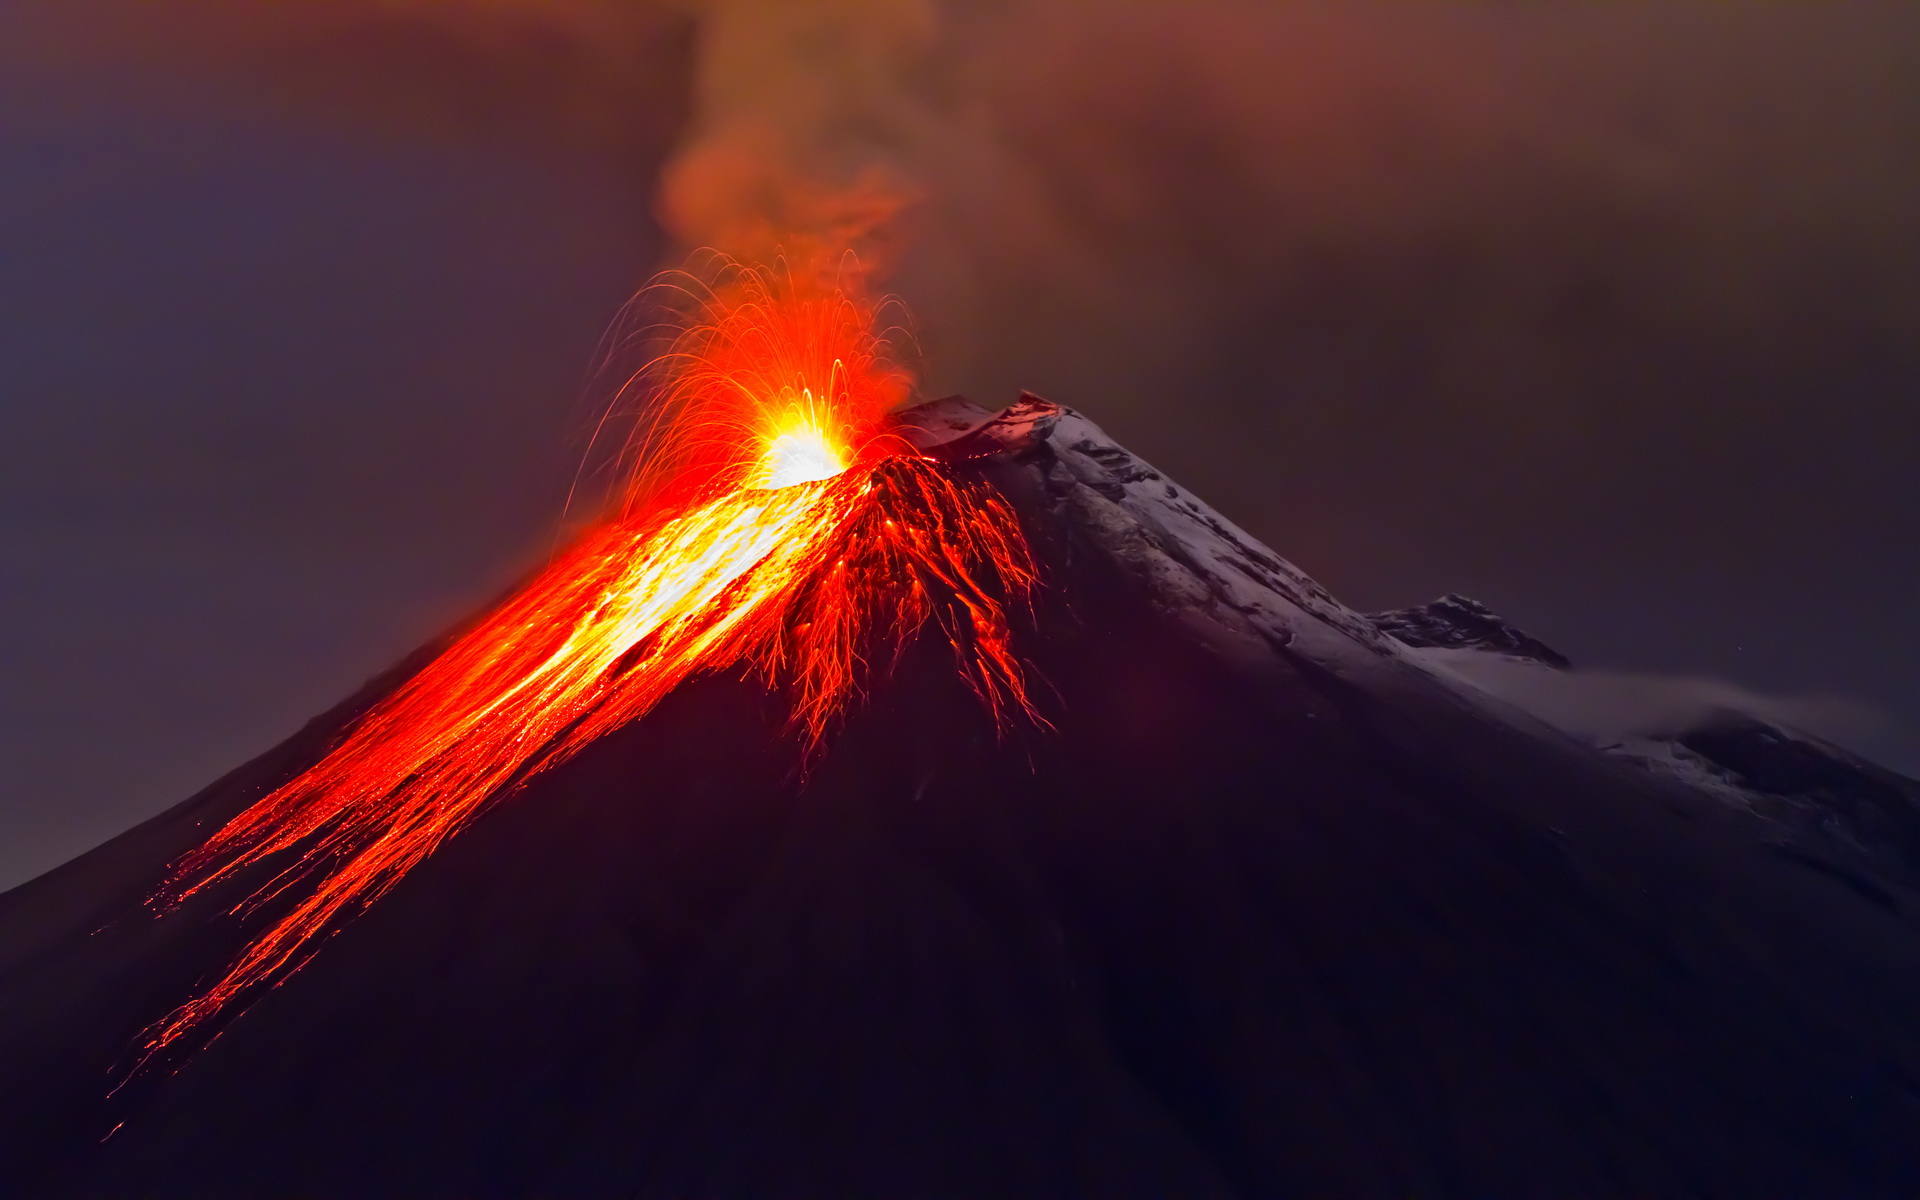 356959 Bild herunterladen erde/natur, tungurahua, kordillere oriental, ecuador, eruption, lava, schichtvulkan, vulkan, vulkane - Hintergrundbilder und Bildschirmschoner kostenlos